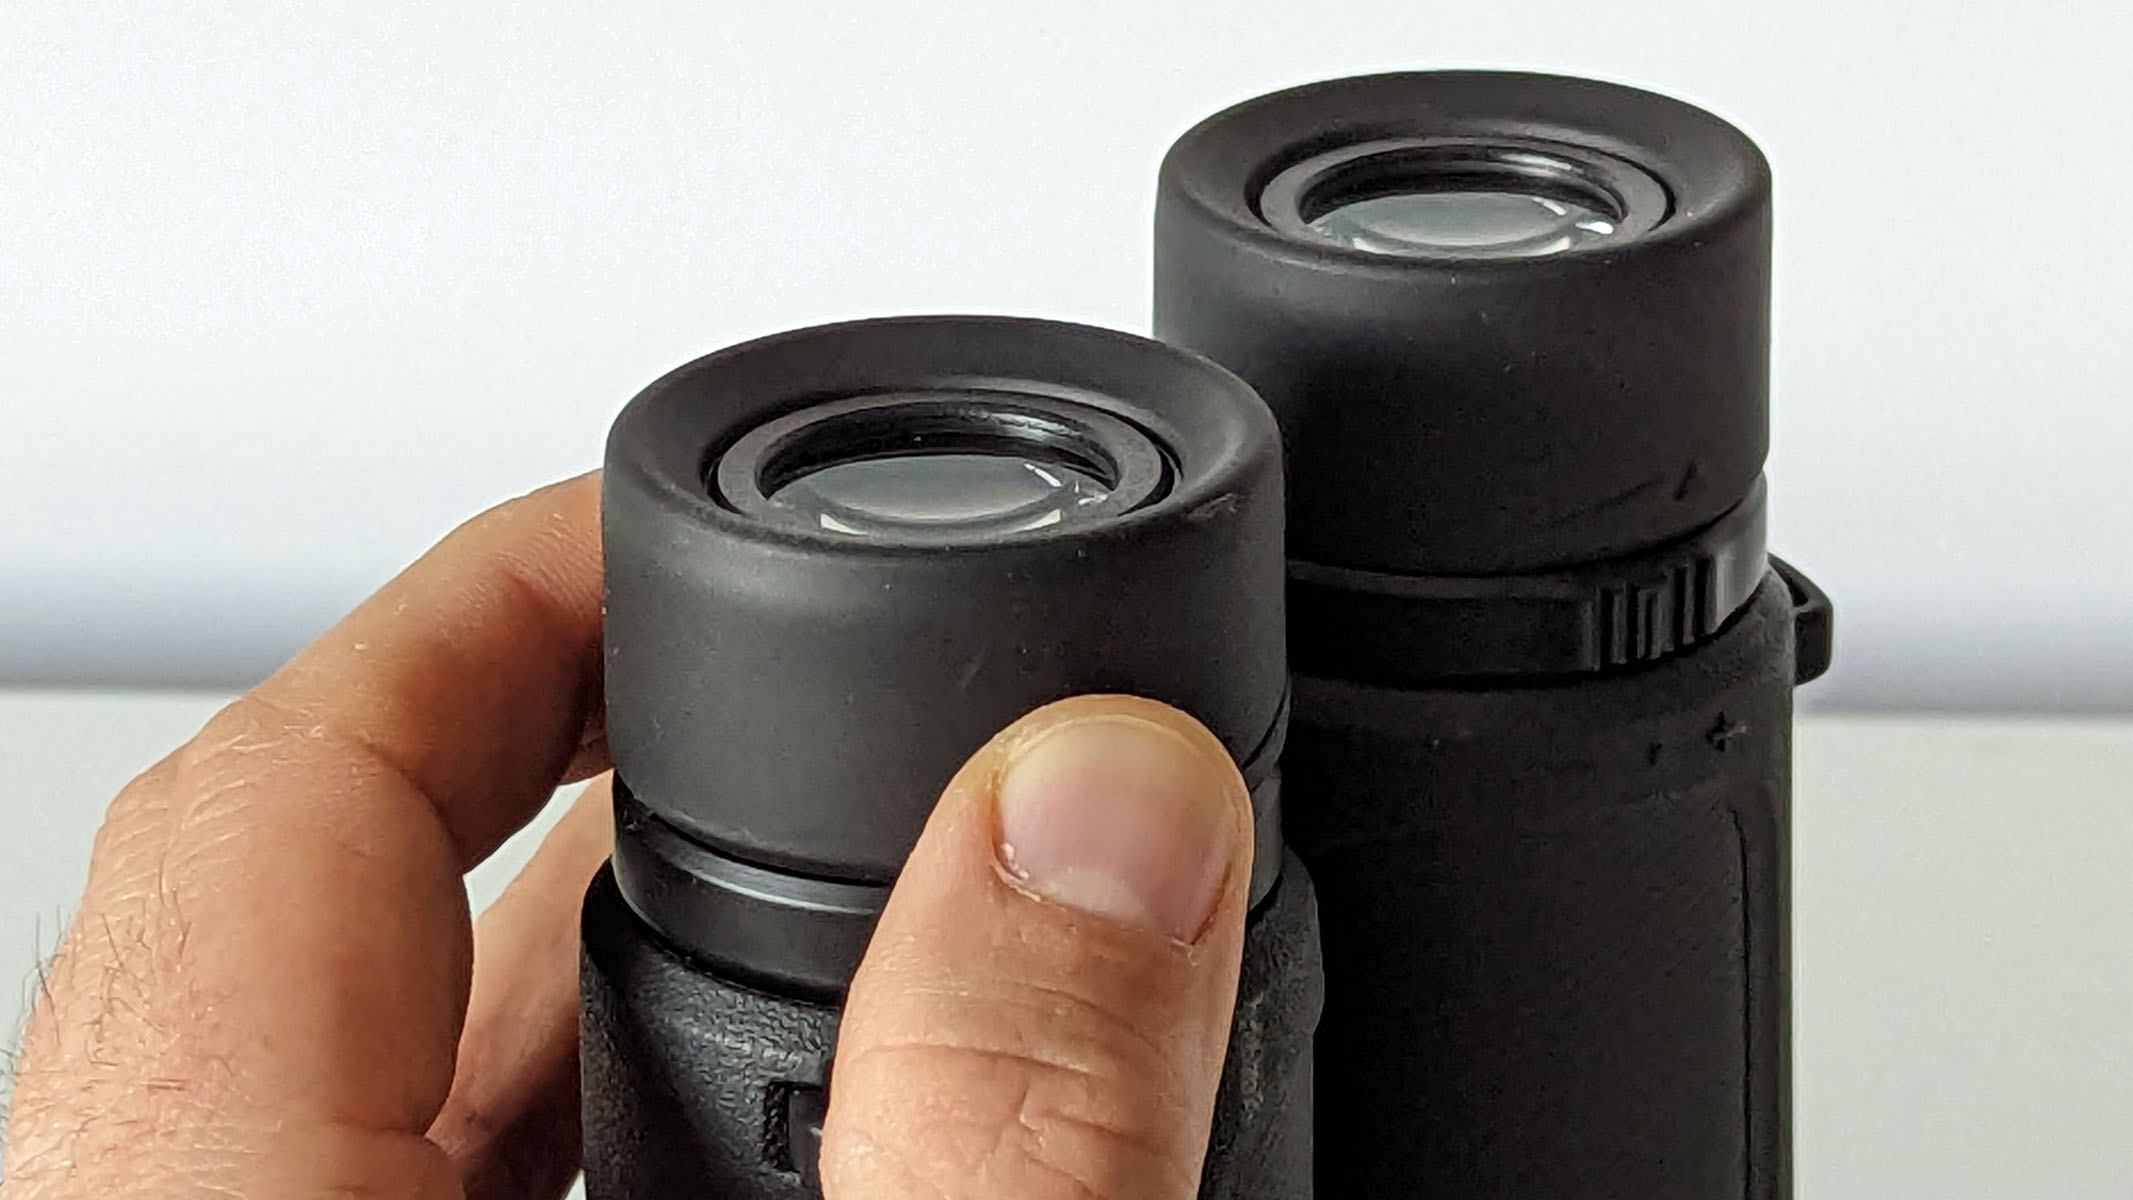 Nikon Prostaff P3 8x42 binoculars eyecups that are adjustable